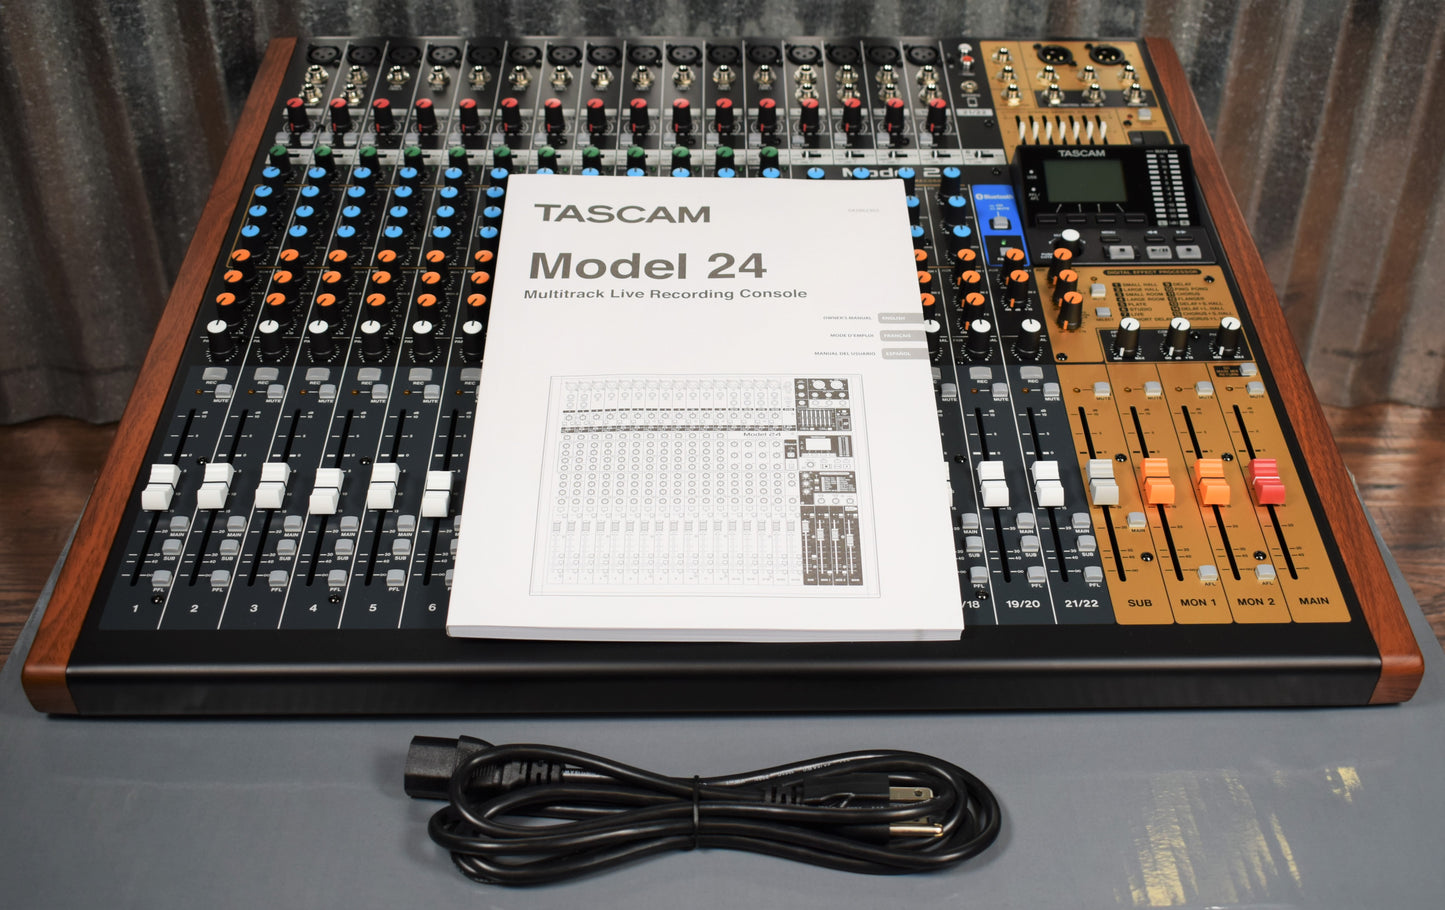 Tascam Model 24 Mixer USB Audio Interface Recorder Controller